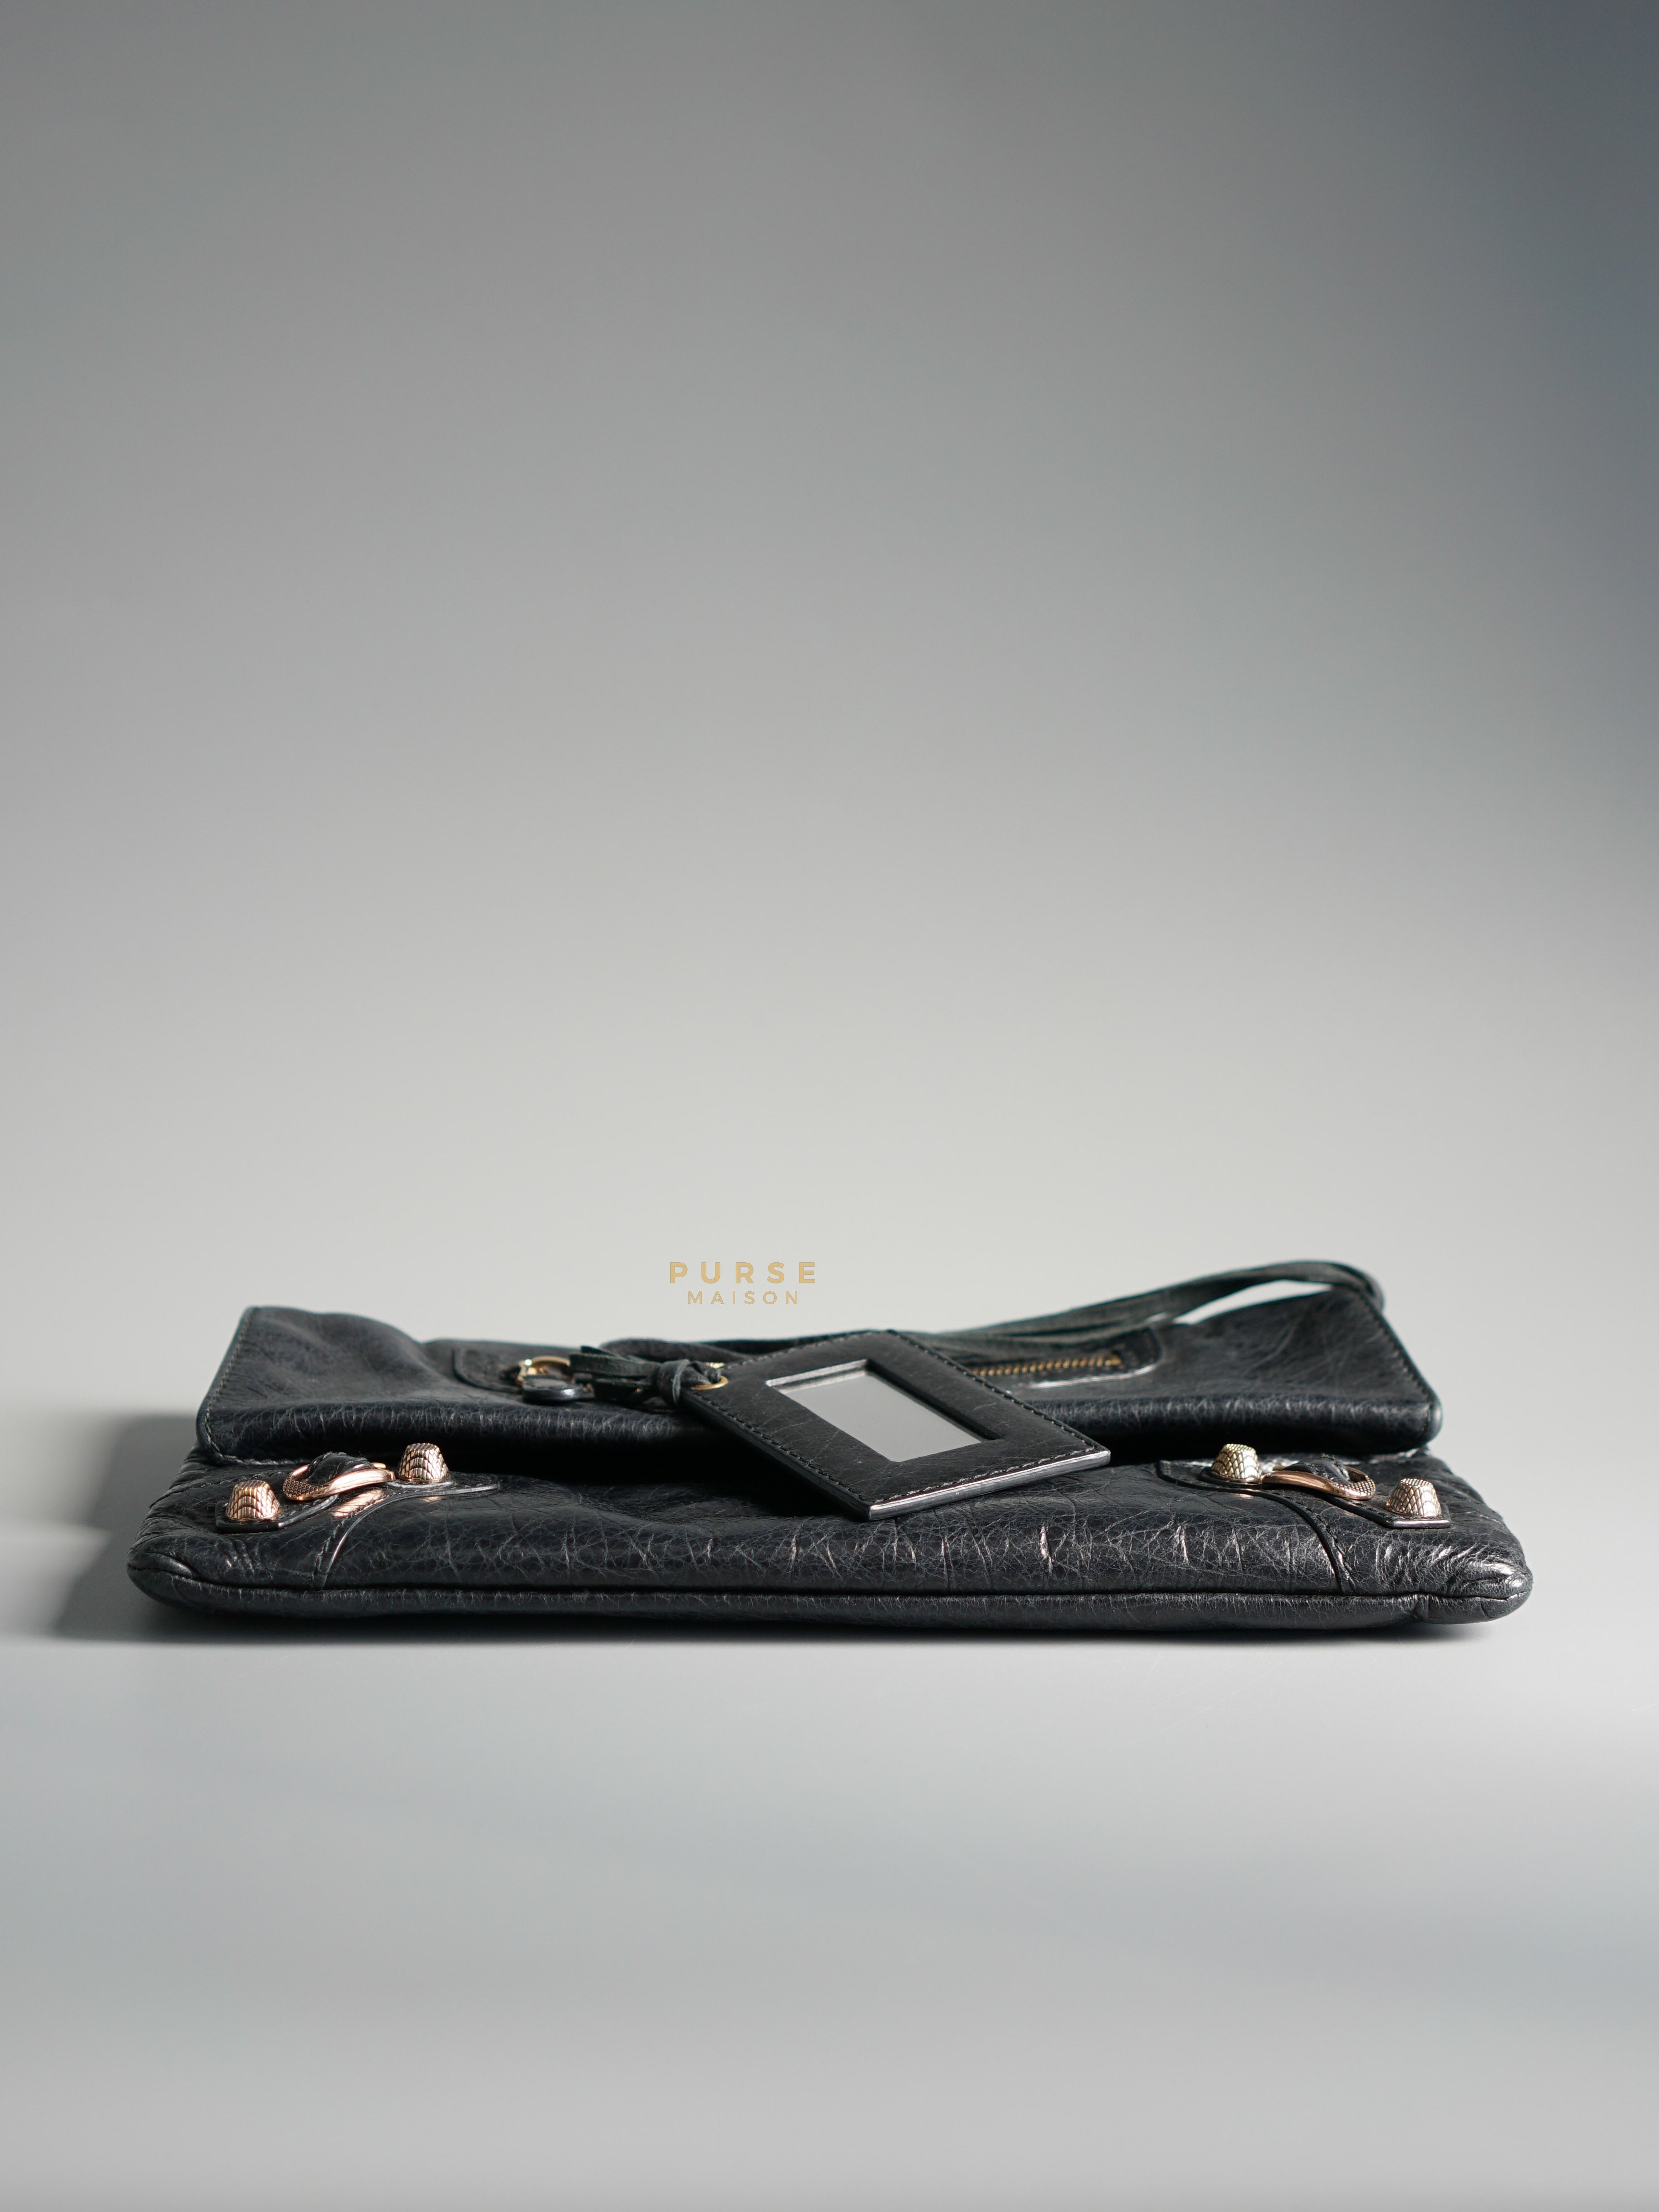 Balenciaga Metallic Edge Black Envelope Clutch | Purse Maison Luxury Bags Shop